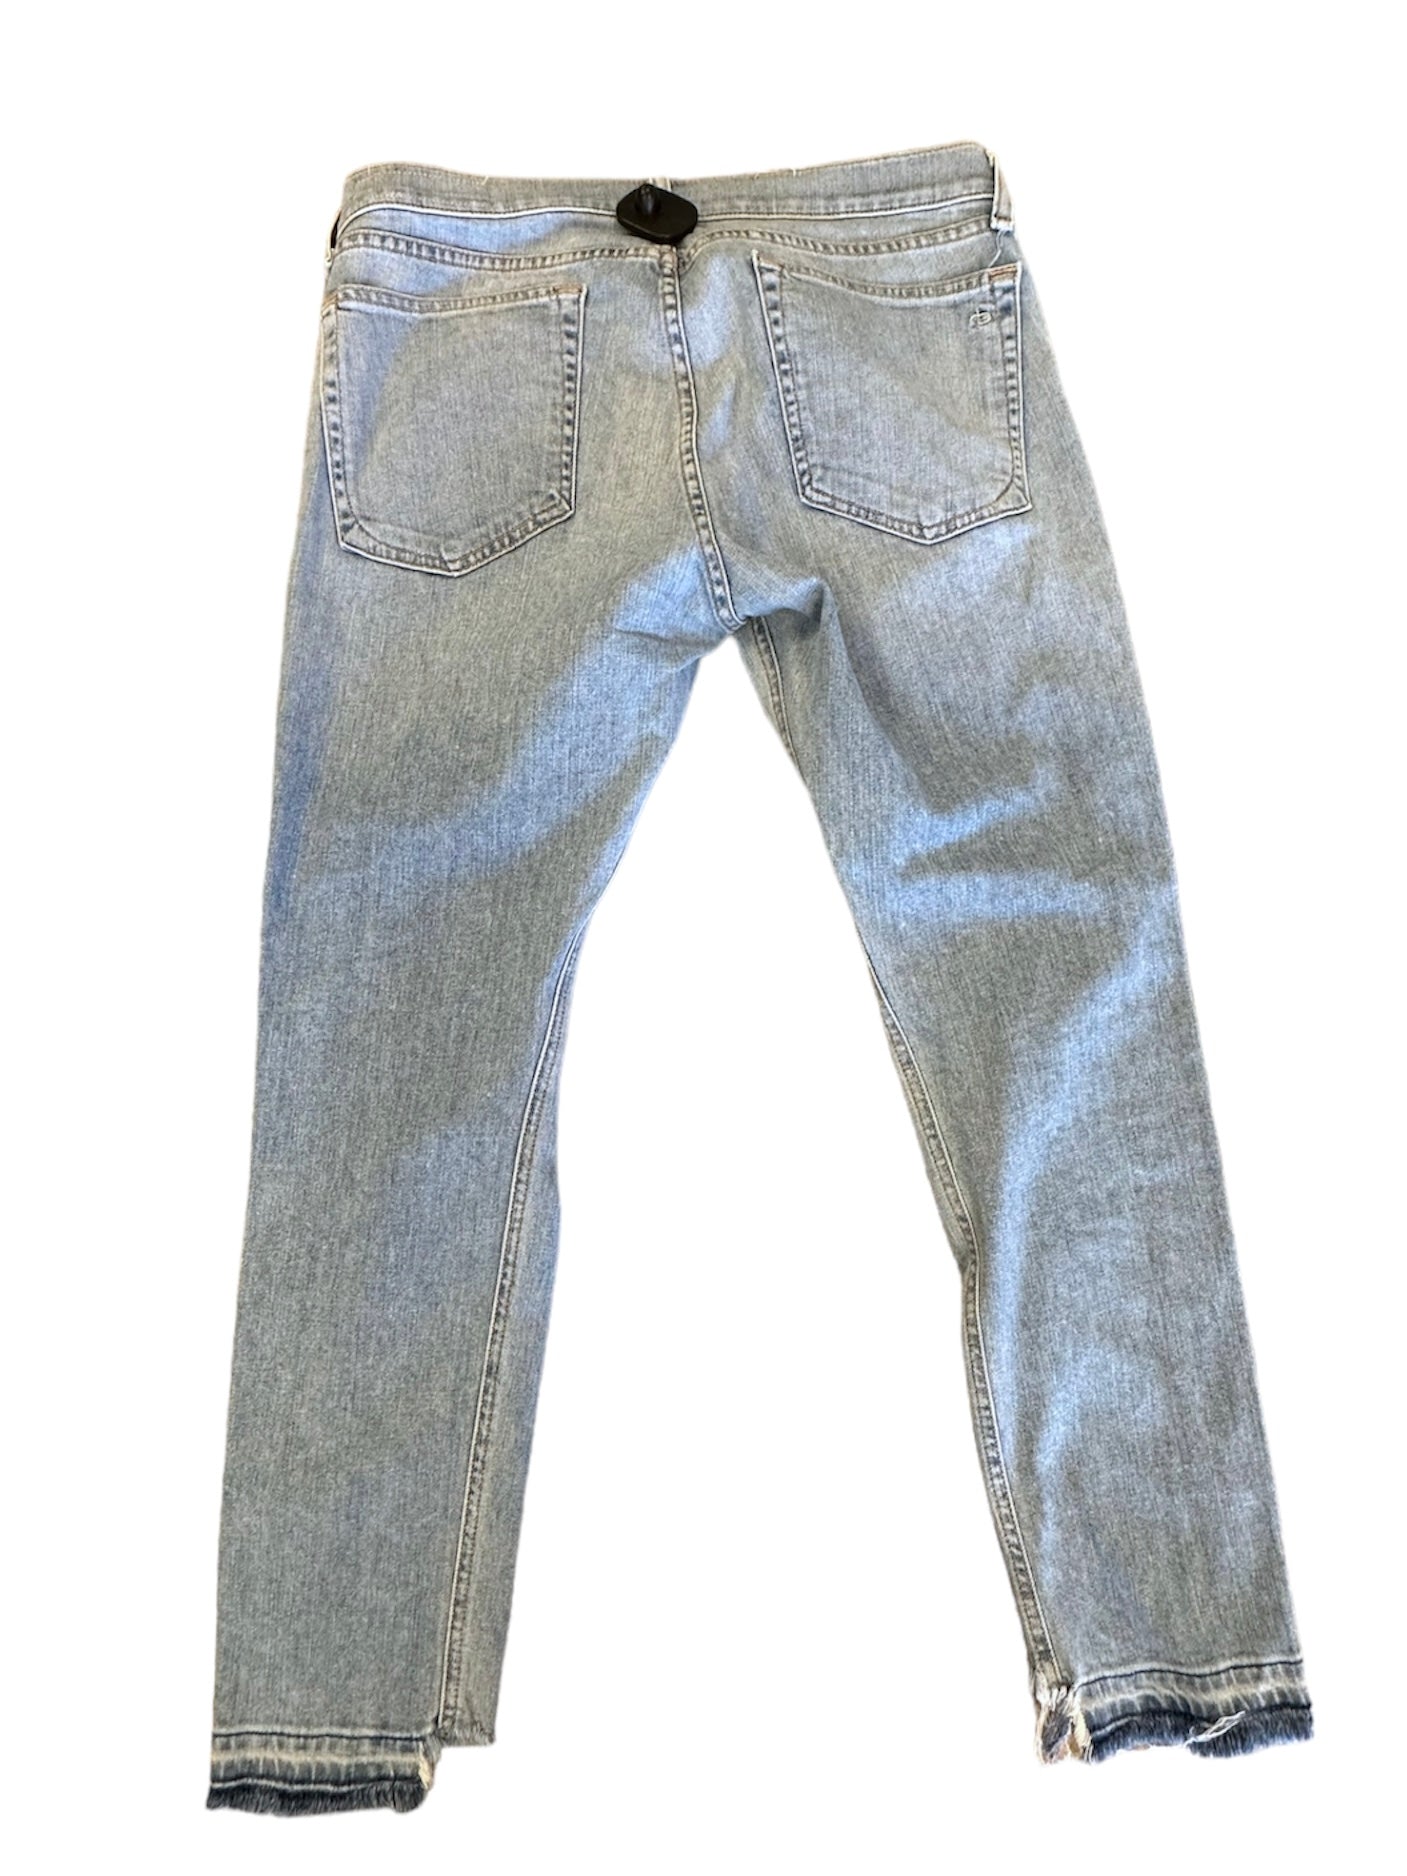 Blue Denim Jeans Cropped Rag & Bones Jeans, Size 8